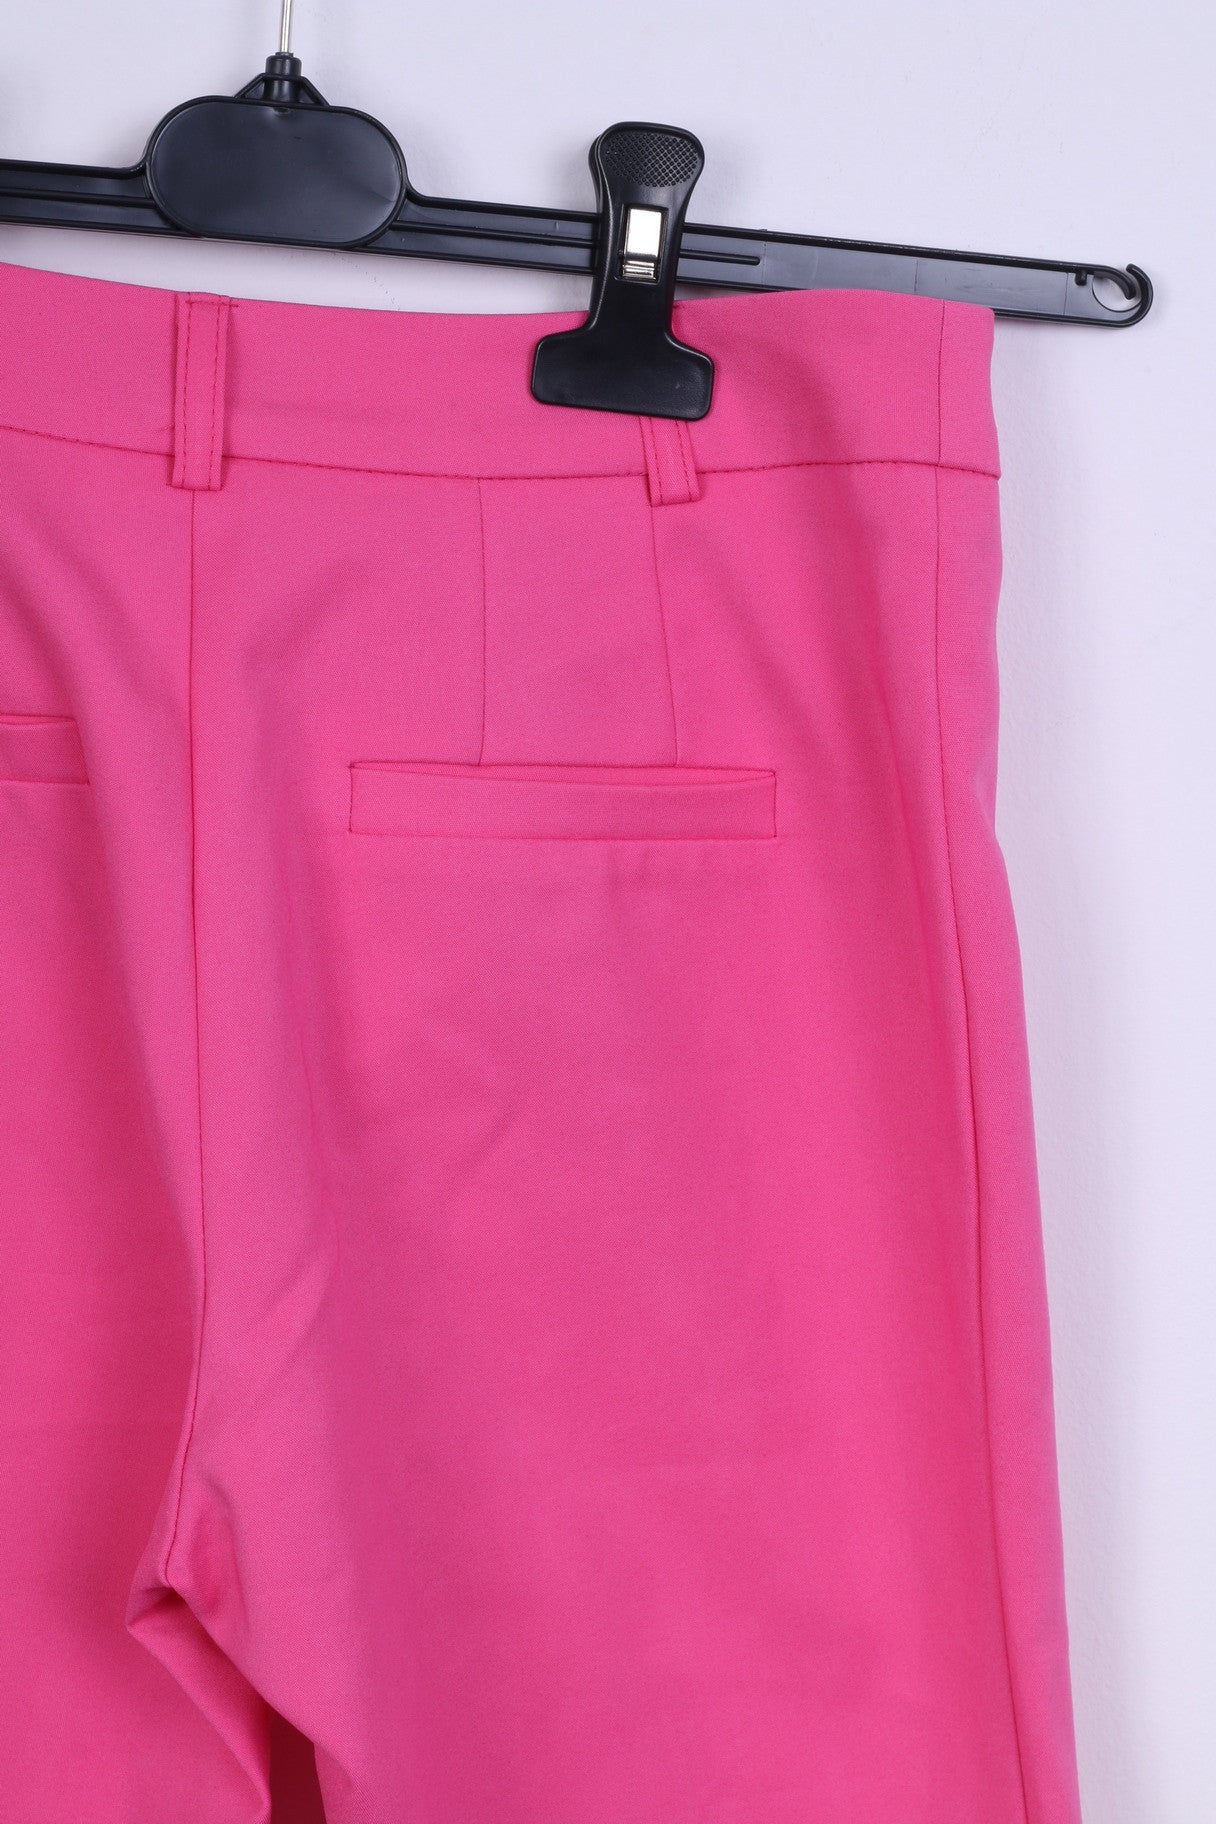 New Ryłko 34 XS Womens Elegant Trousers Pink Cotton Chic